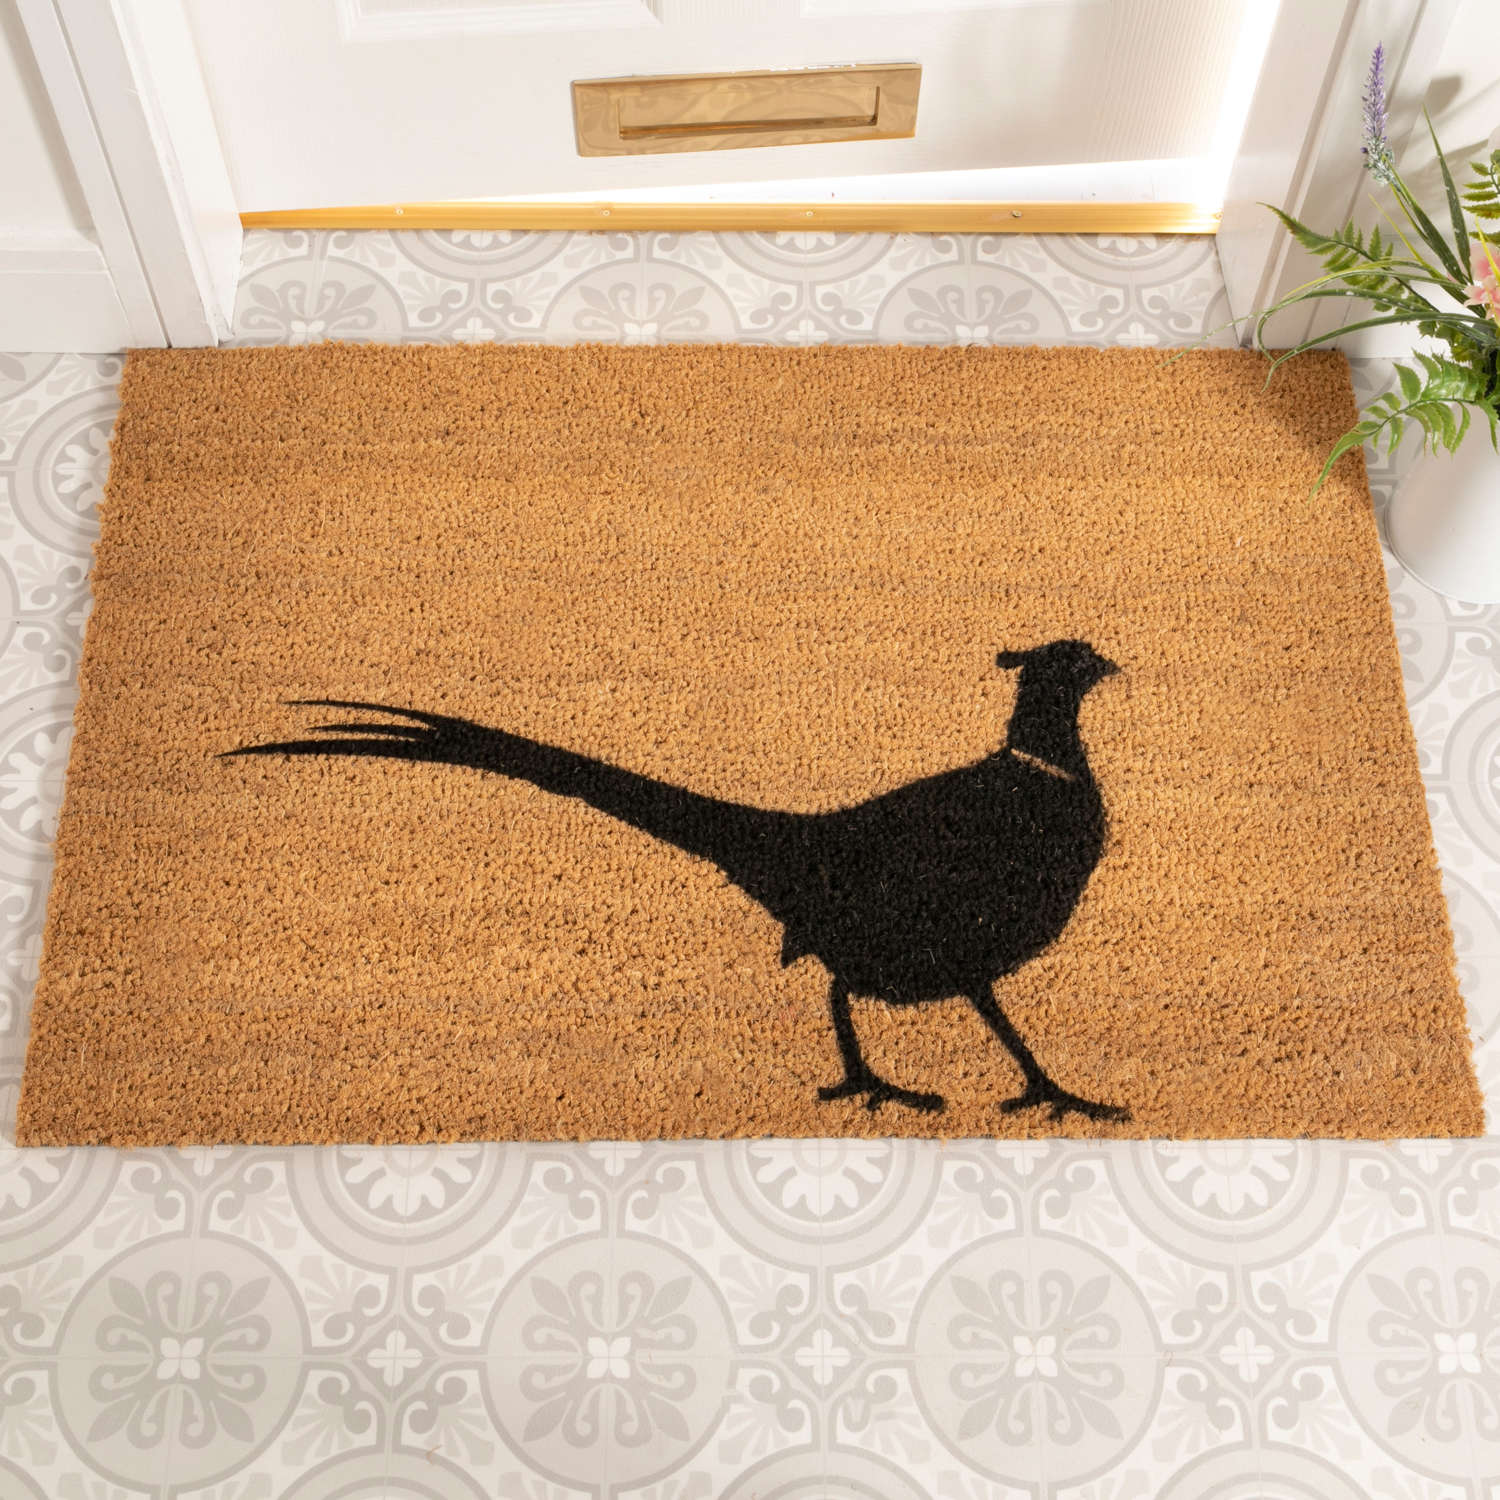 Pheasant design rural house larger size doormat